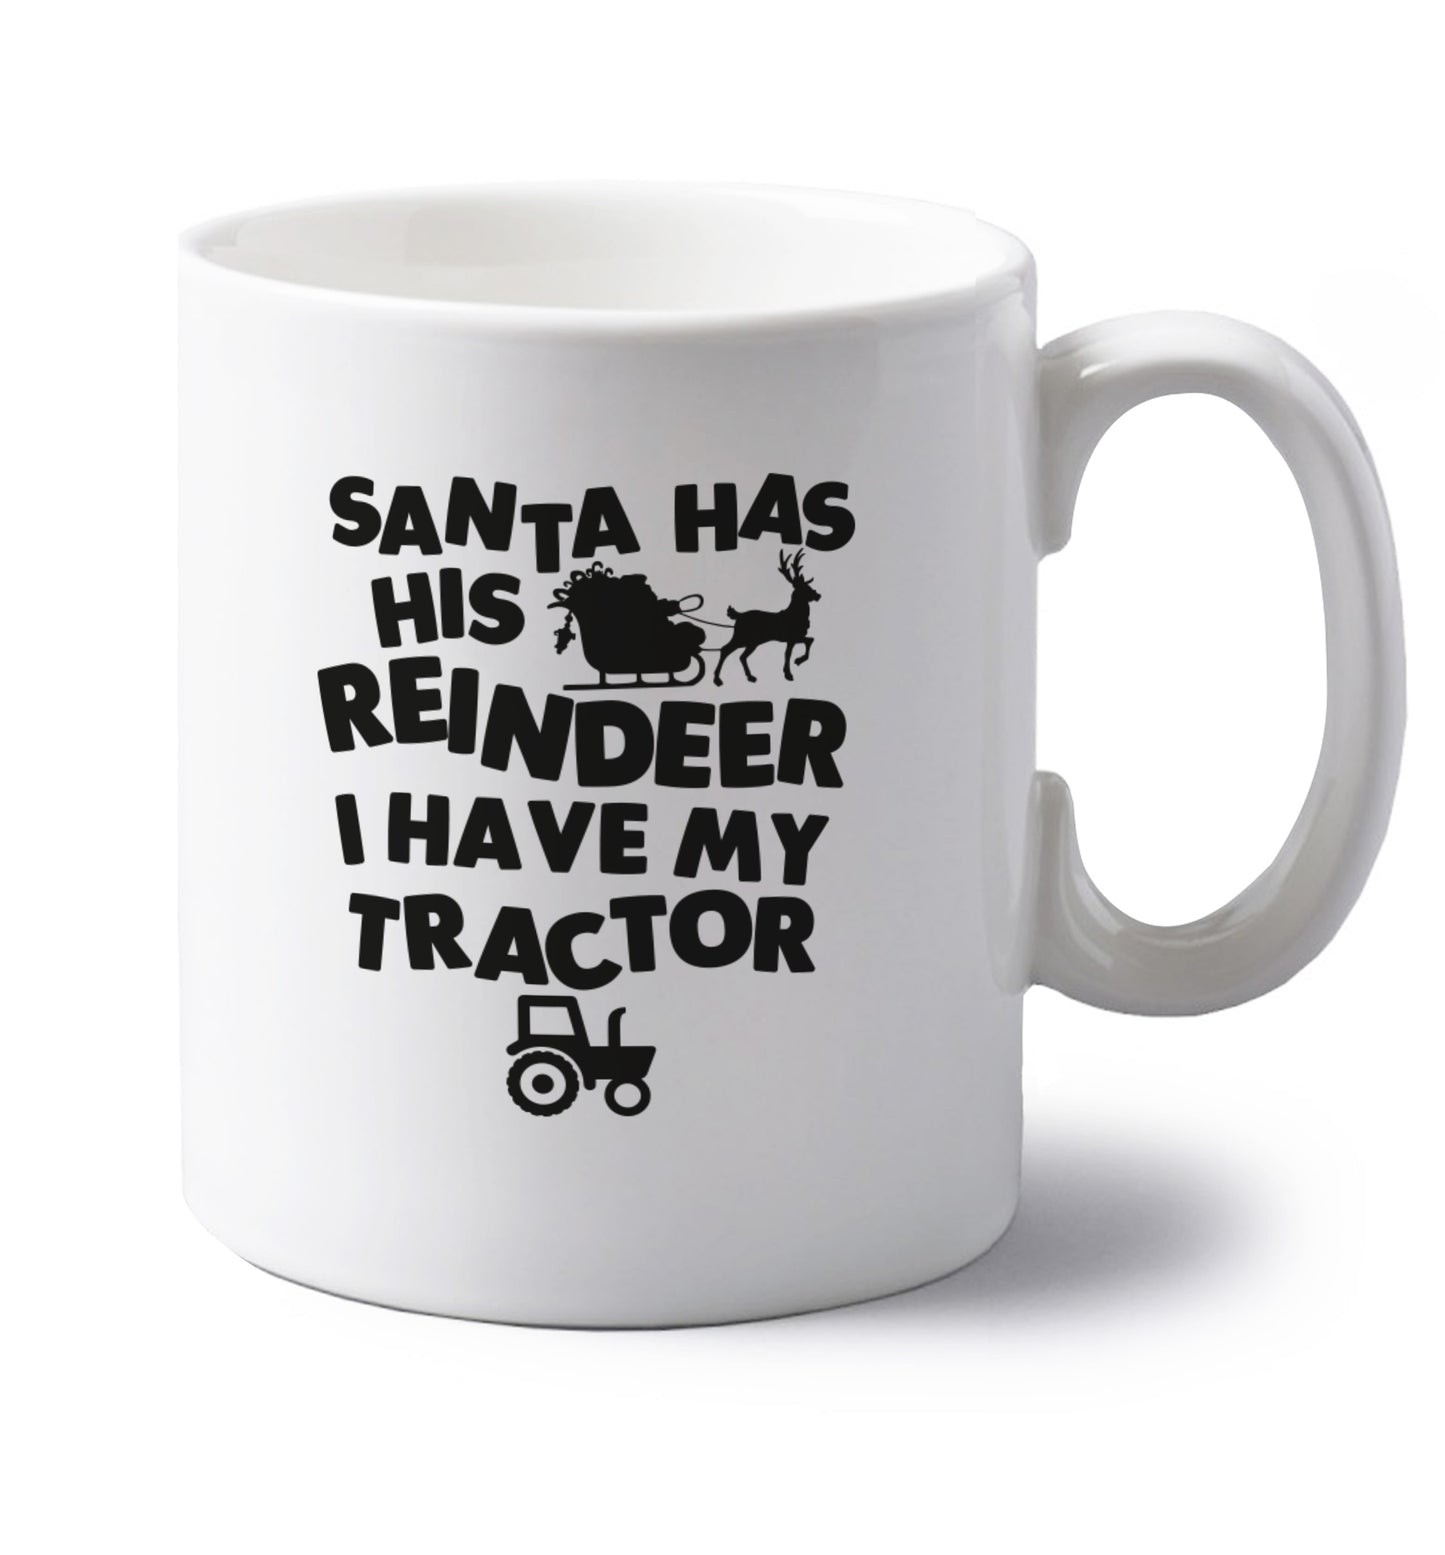 Santa has his reindeer I have my tractor left handed white ceramic mug 